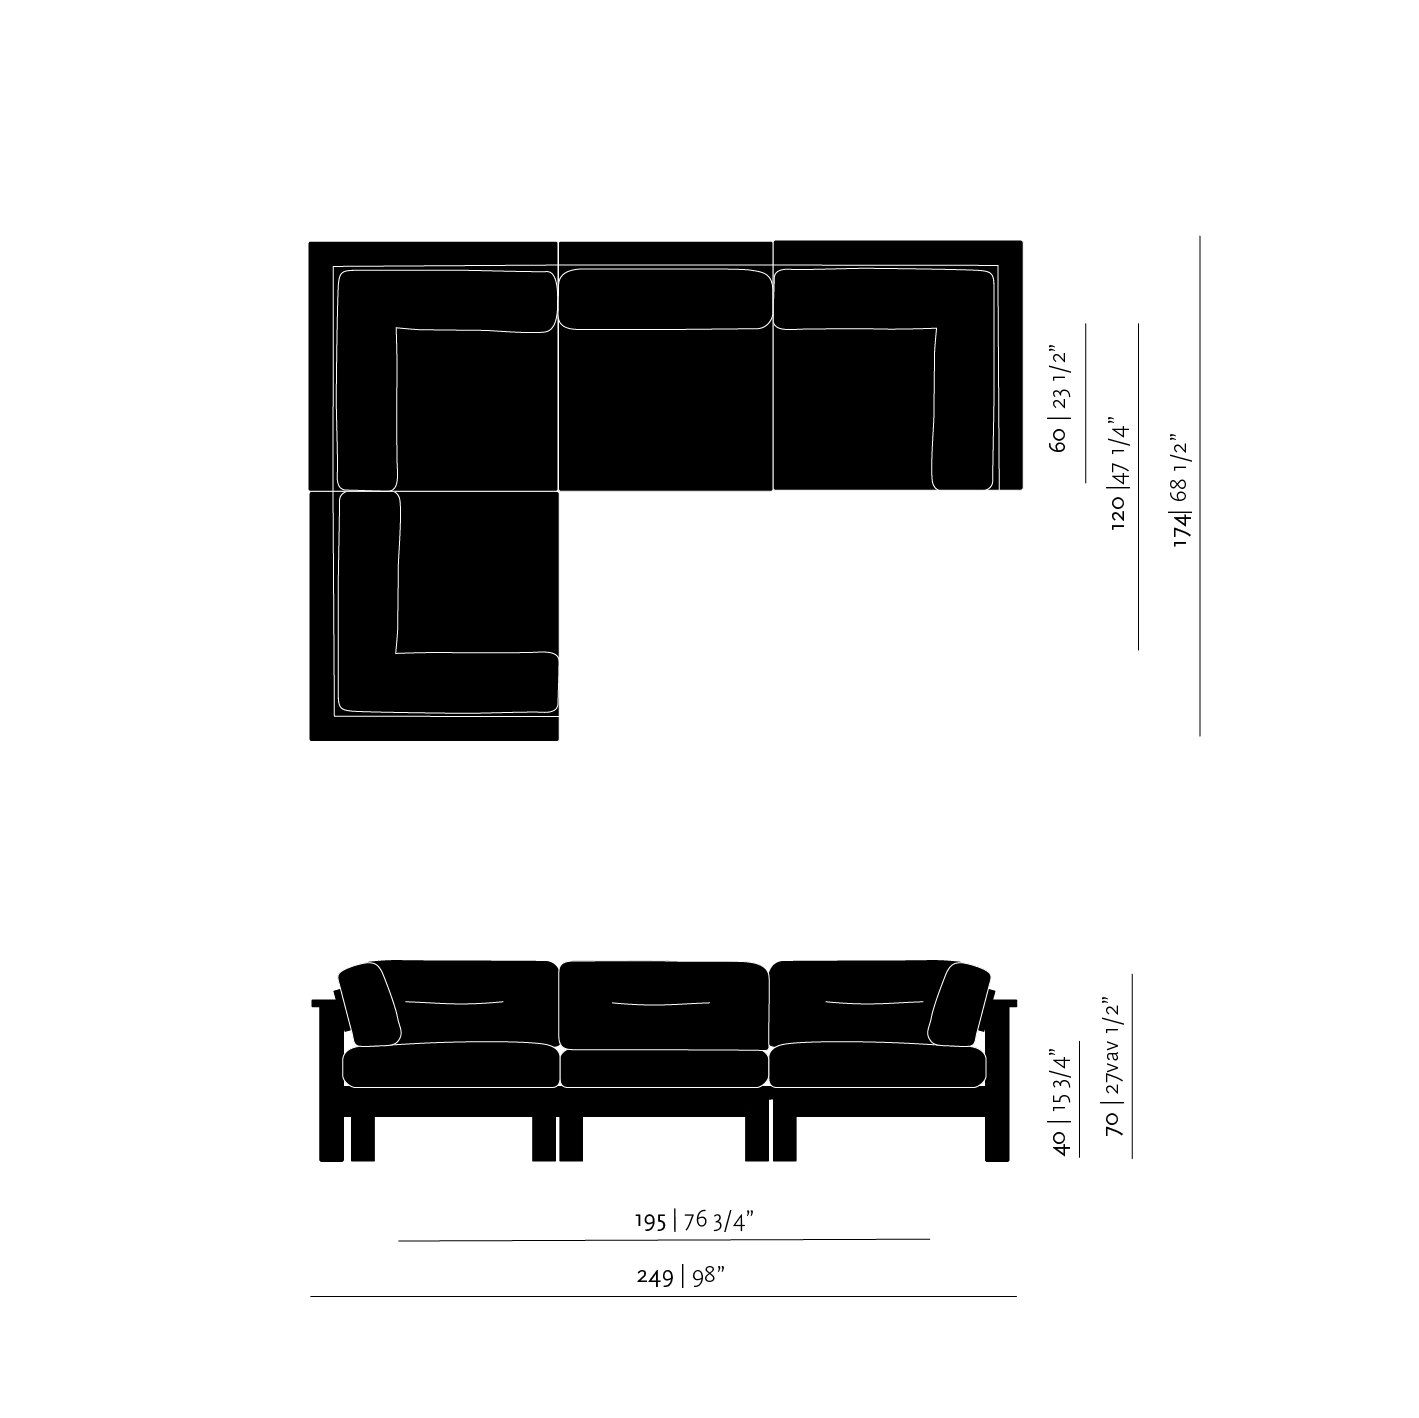 Design modern sofa | Element Lounge Sofa heritage moss18012 | Studio HENK| 